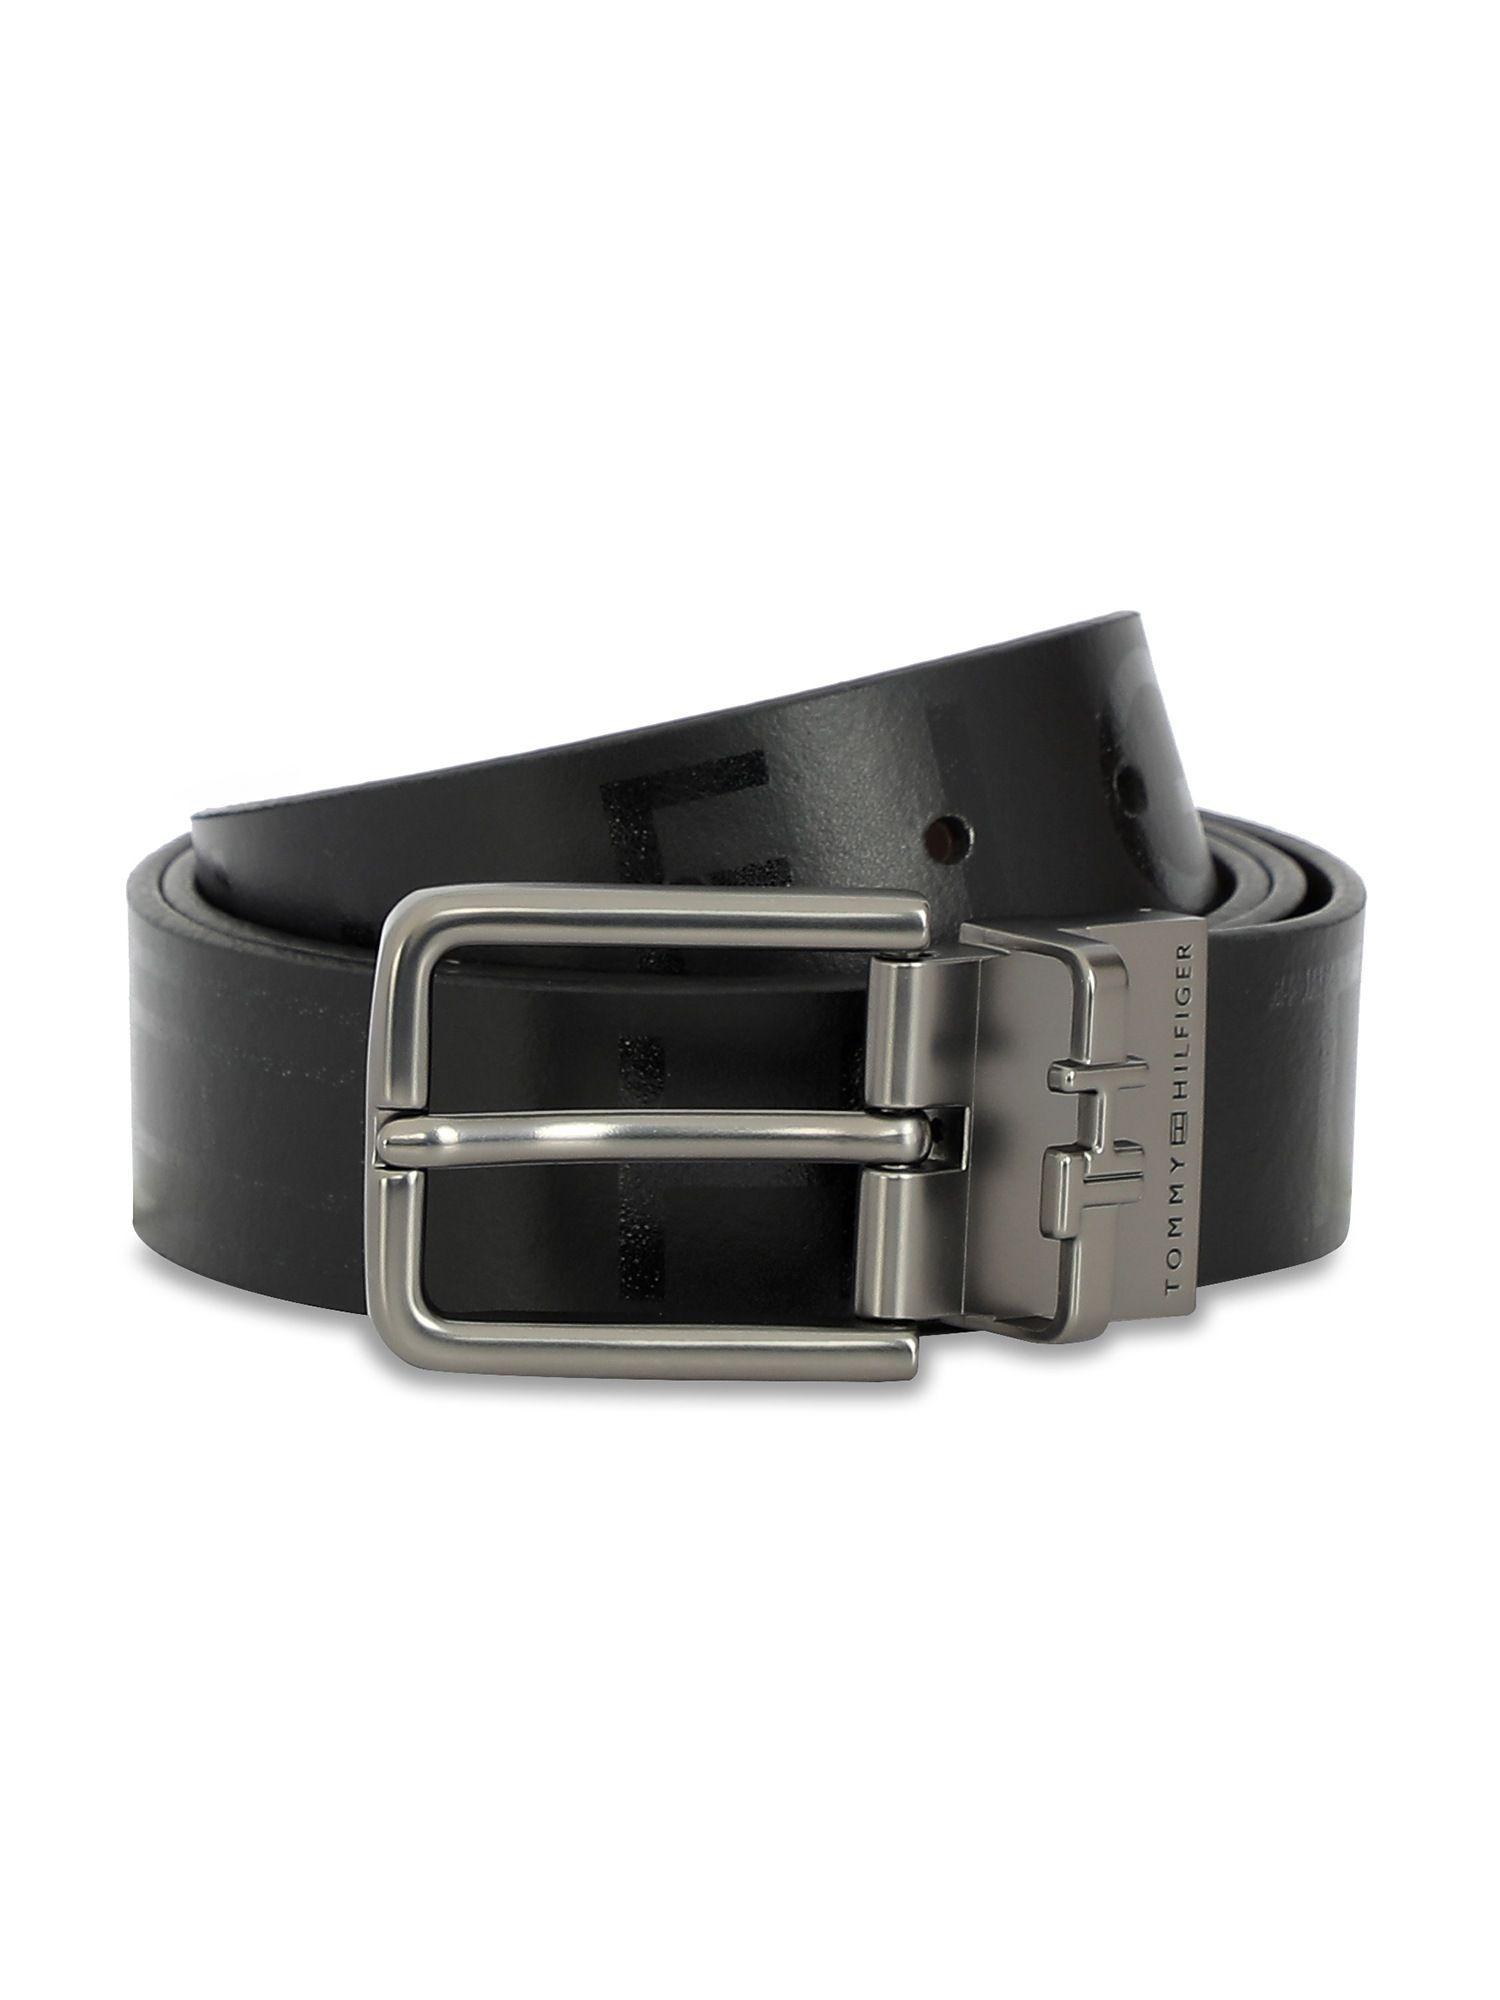 sergio-mens-leather-reversible-printed-belt-multi-color